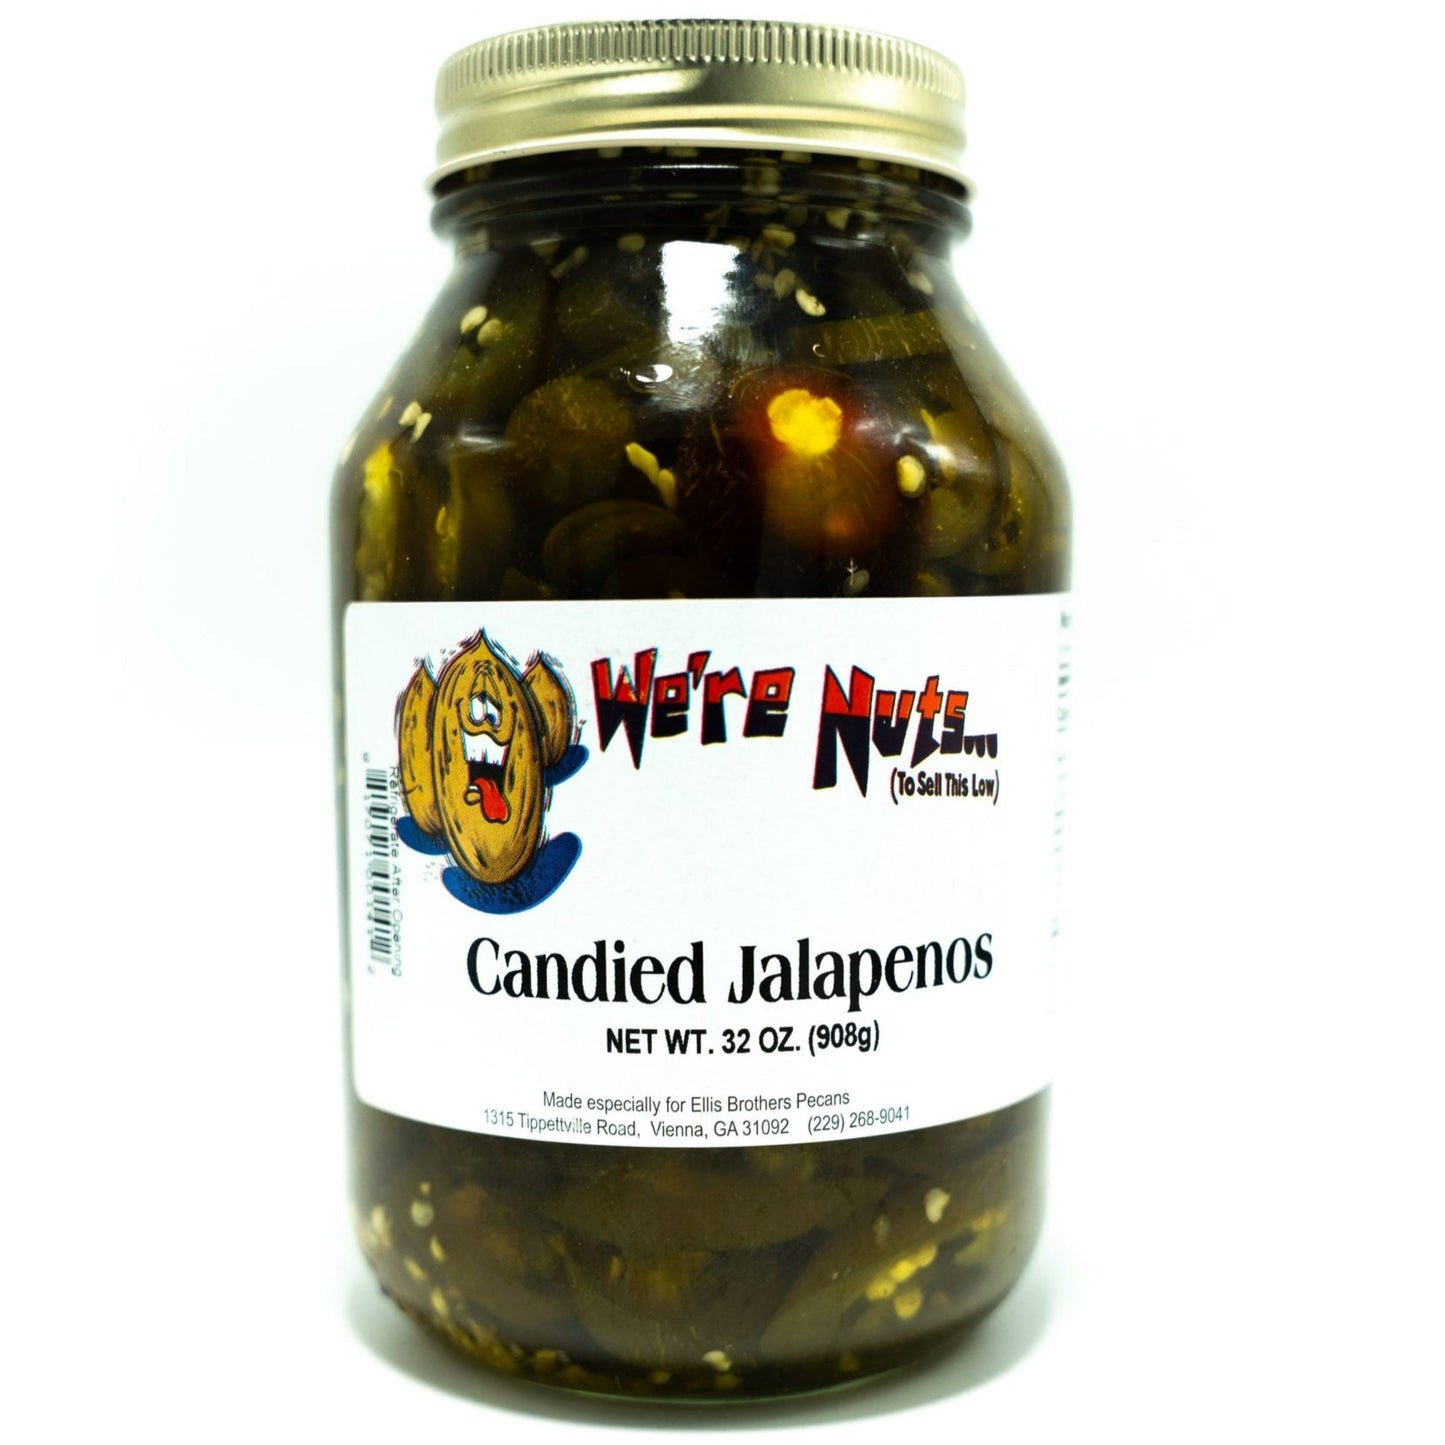 Ellis Bros. Pecans candied jalapenos in glass jar